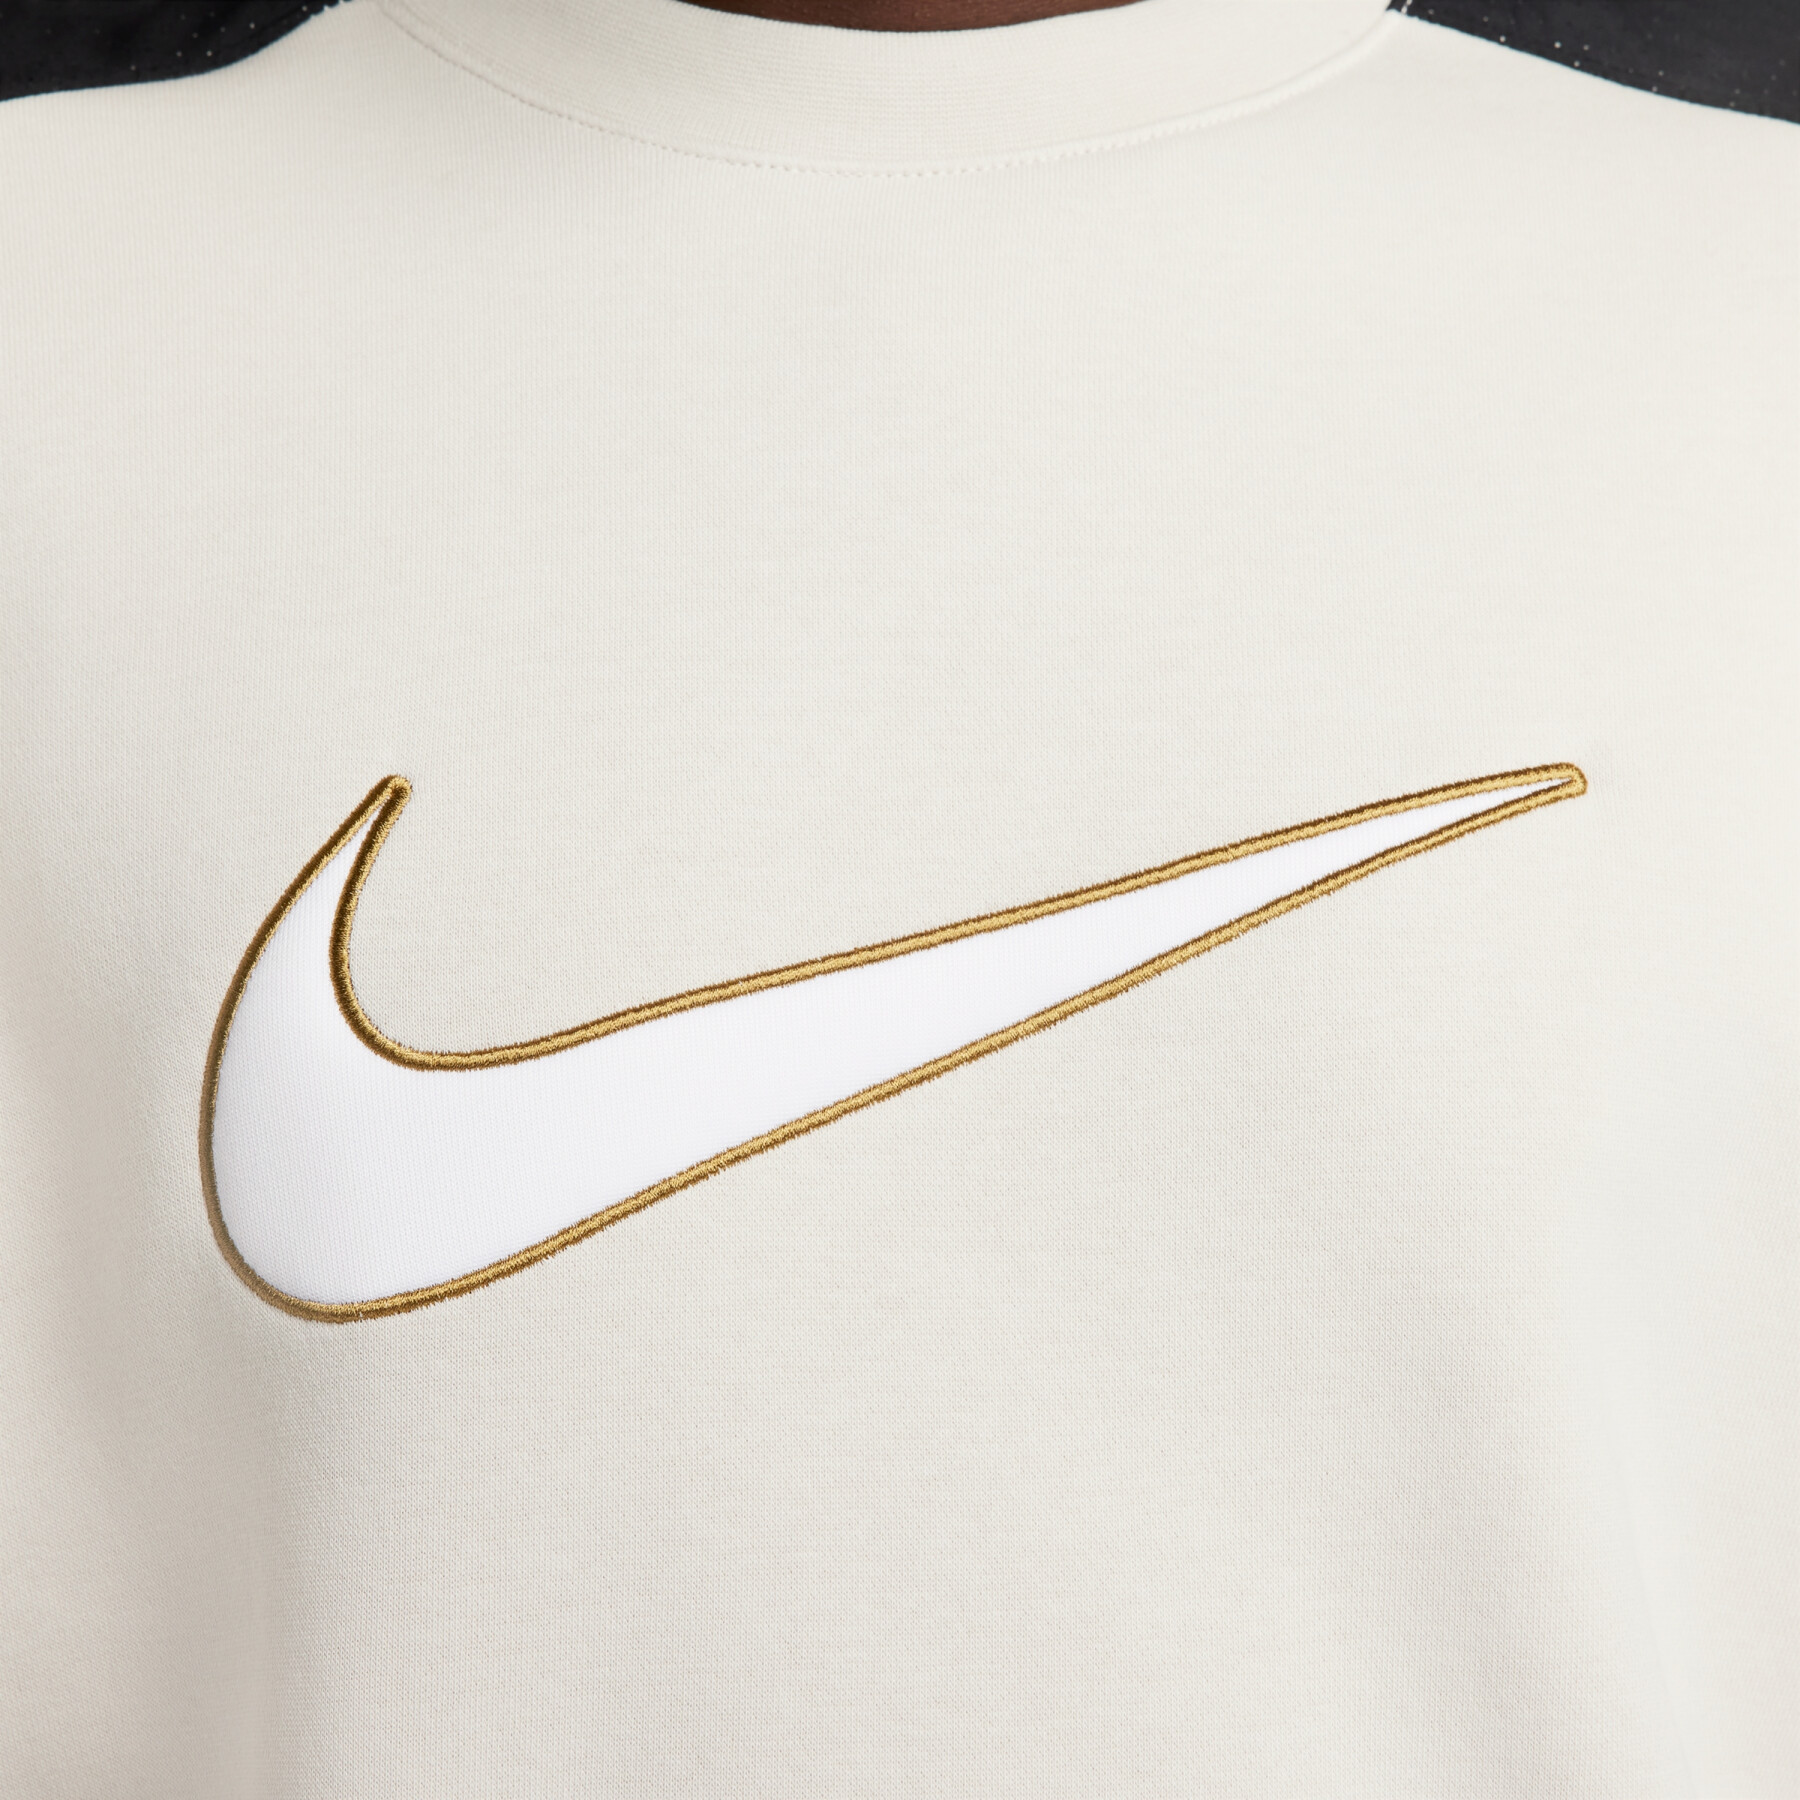 Round neck sweatshirt Nike